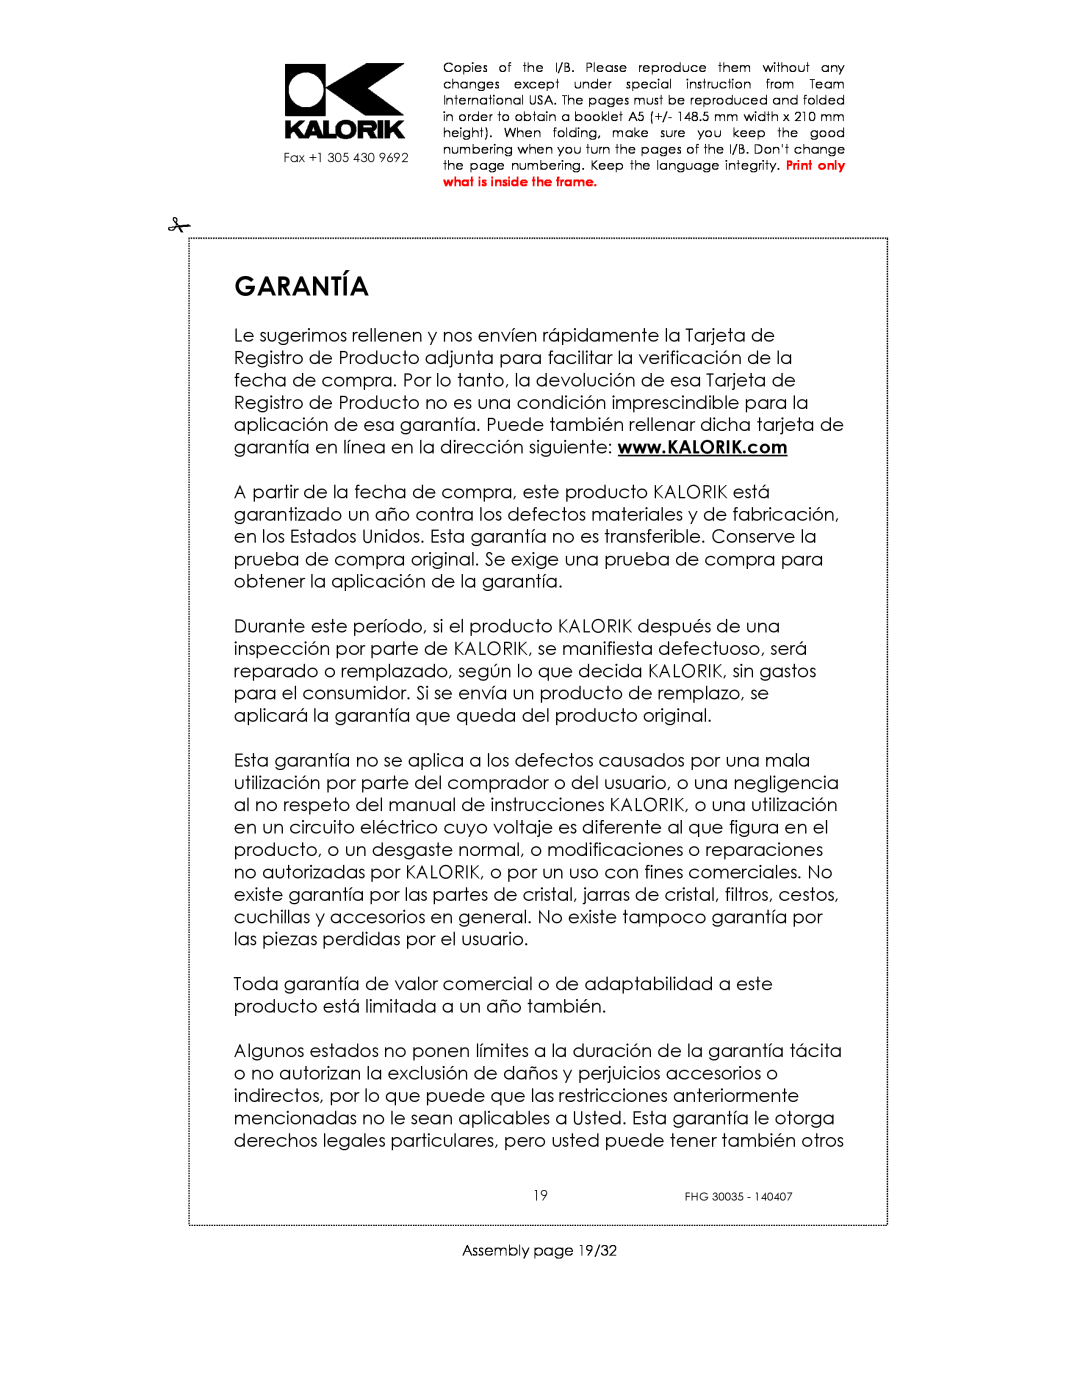 Kalorik FHG 30035 manual Garantía, Assembly page 19/32 